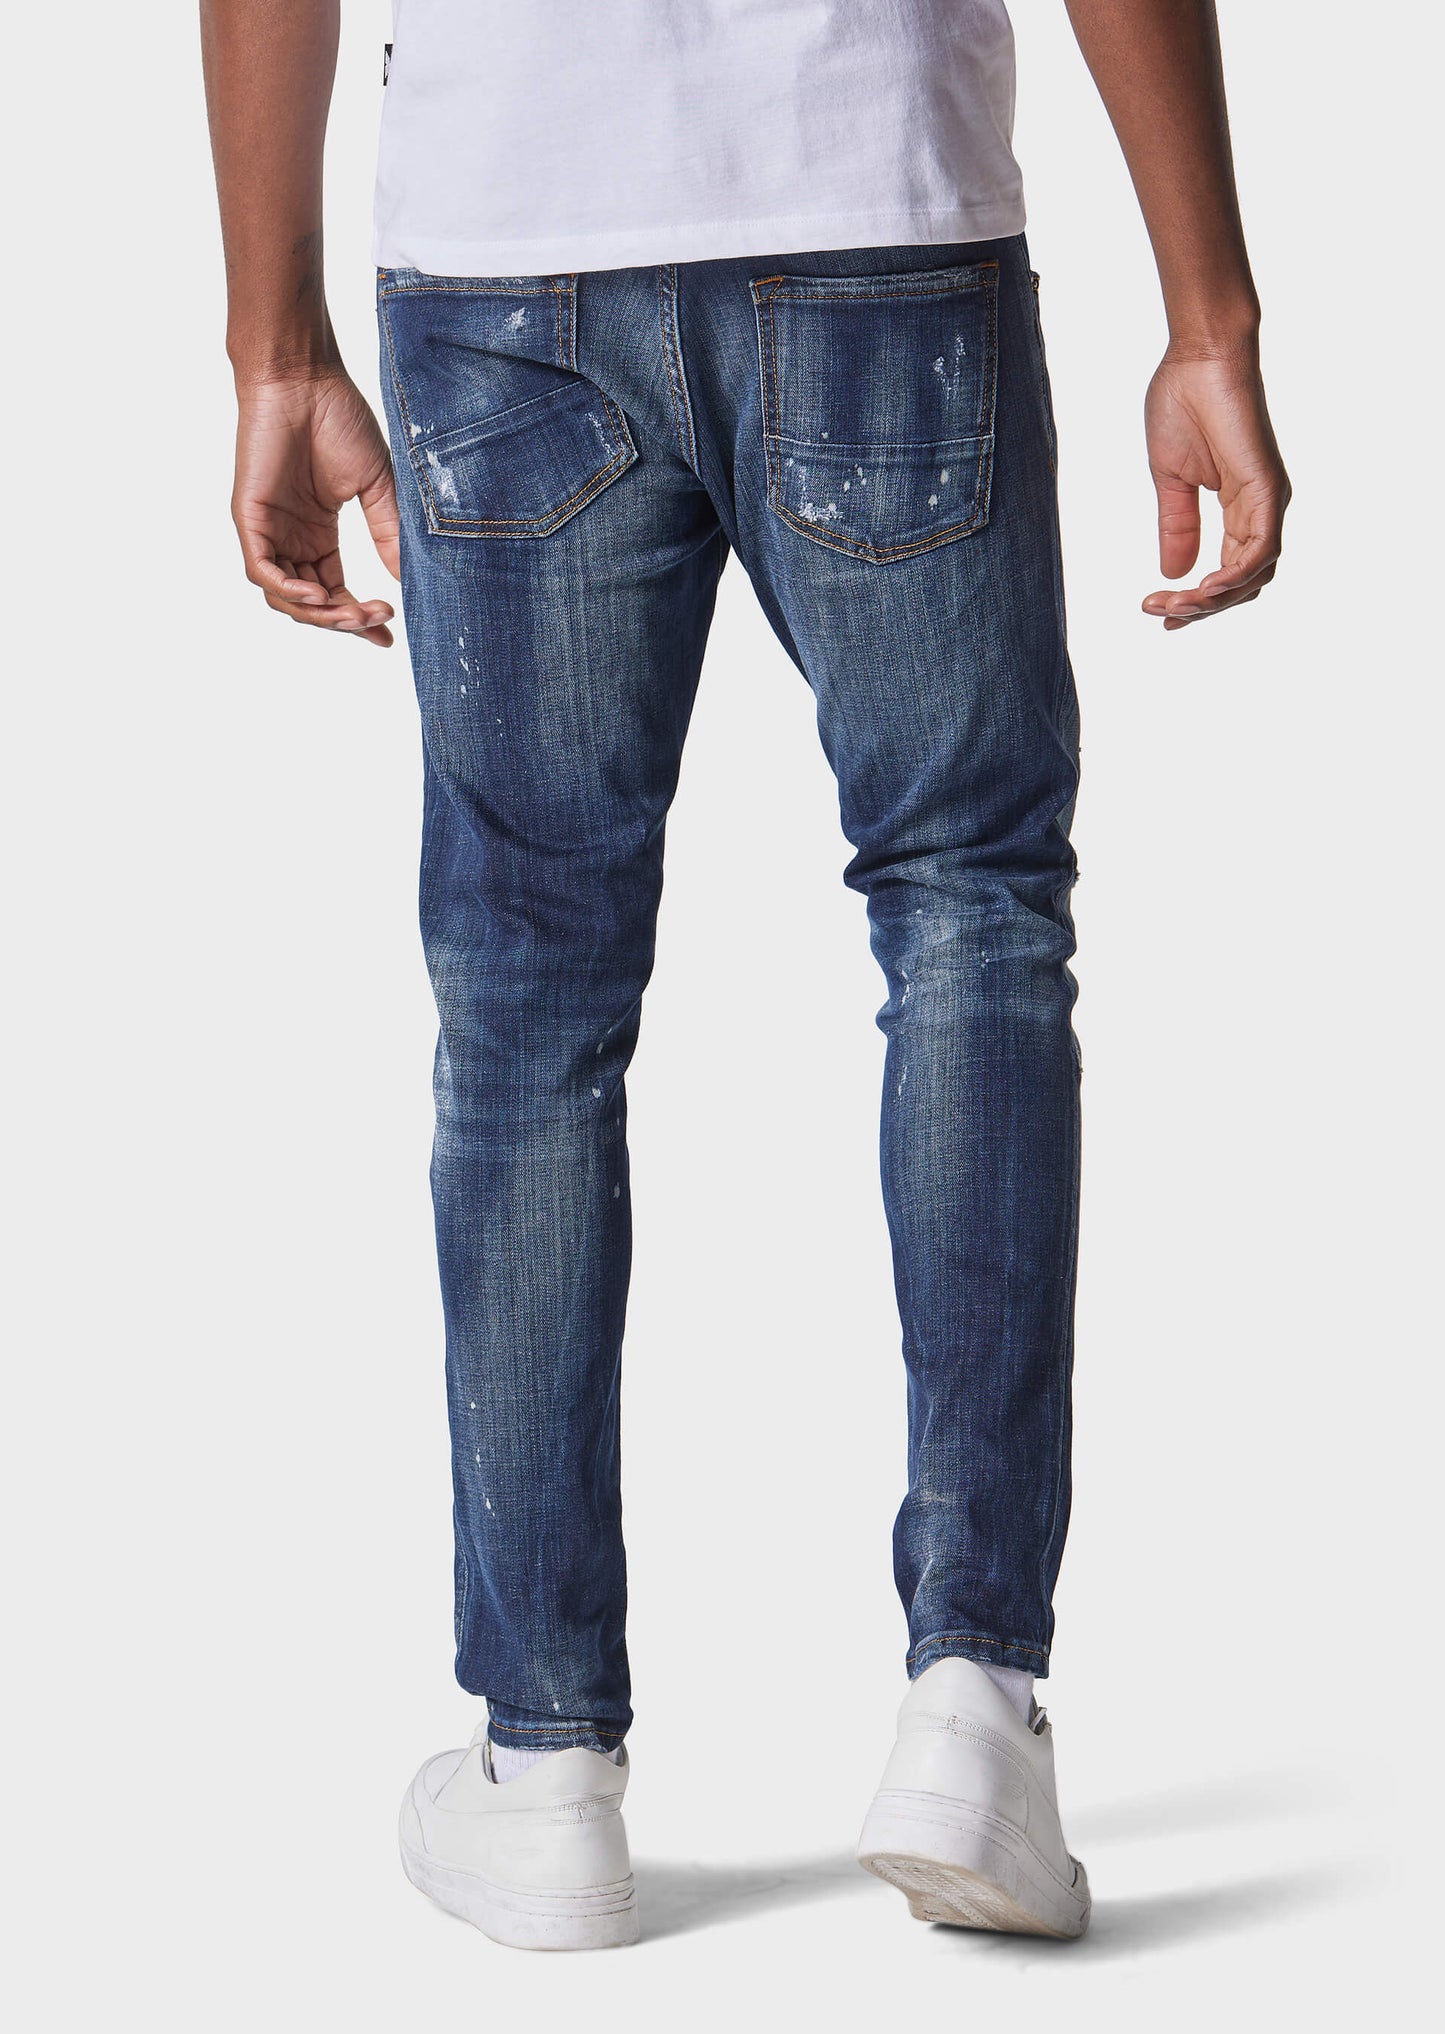 Deniro Lat 977 Slim Fit Jeans